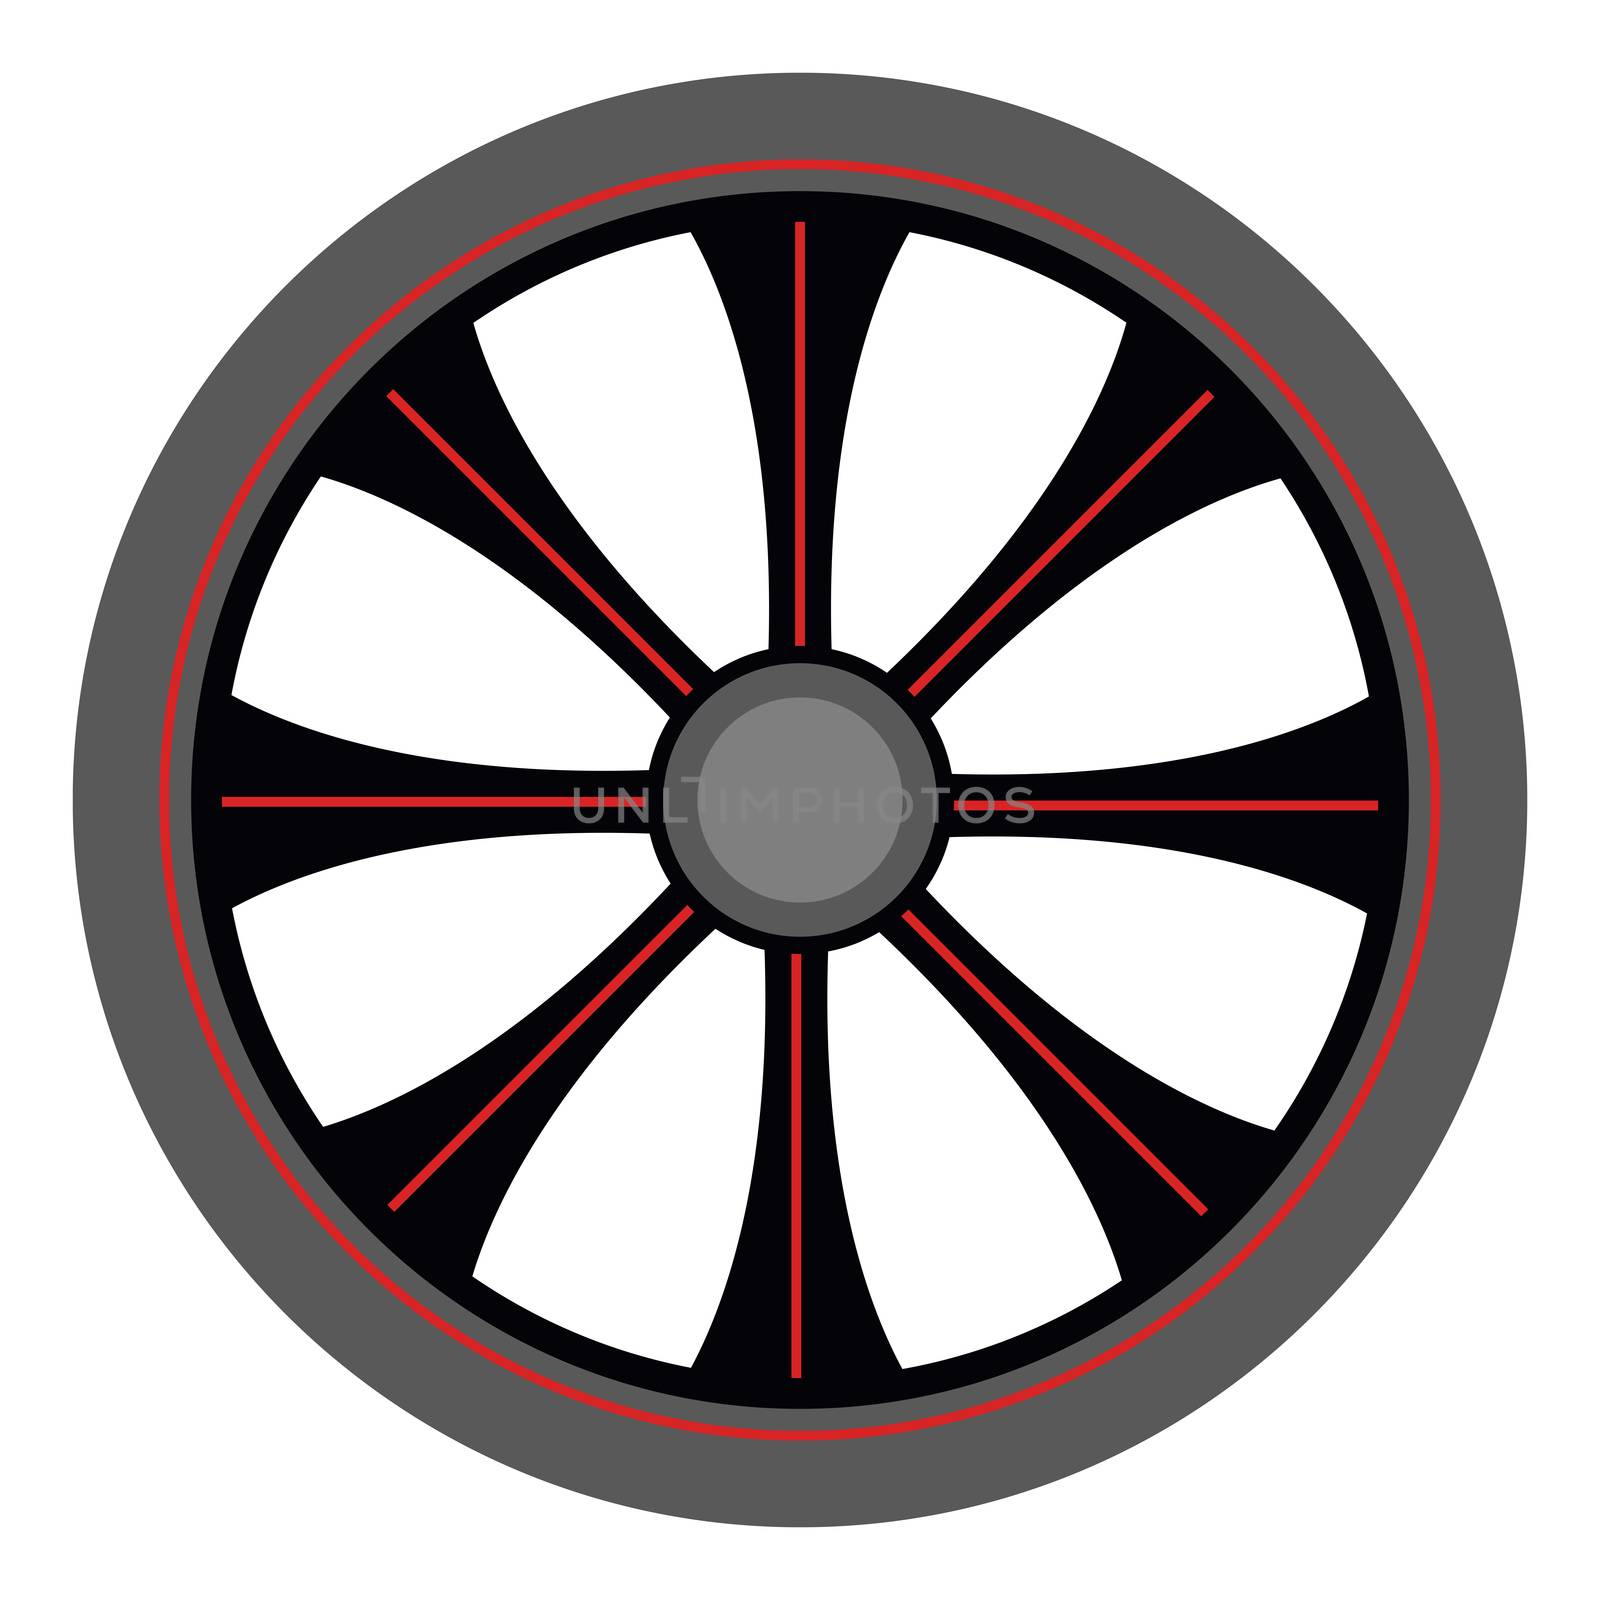 Alloy wheel, illustration, vector on white background